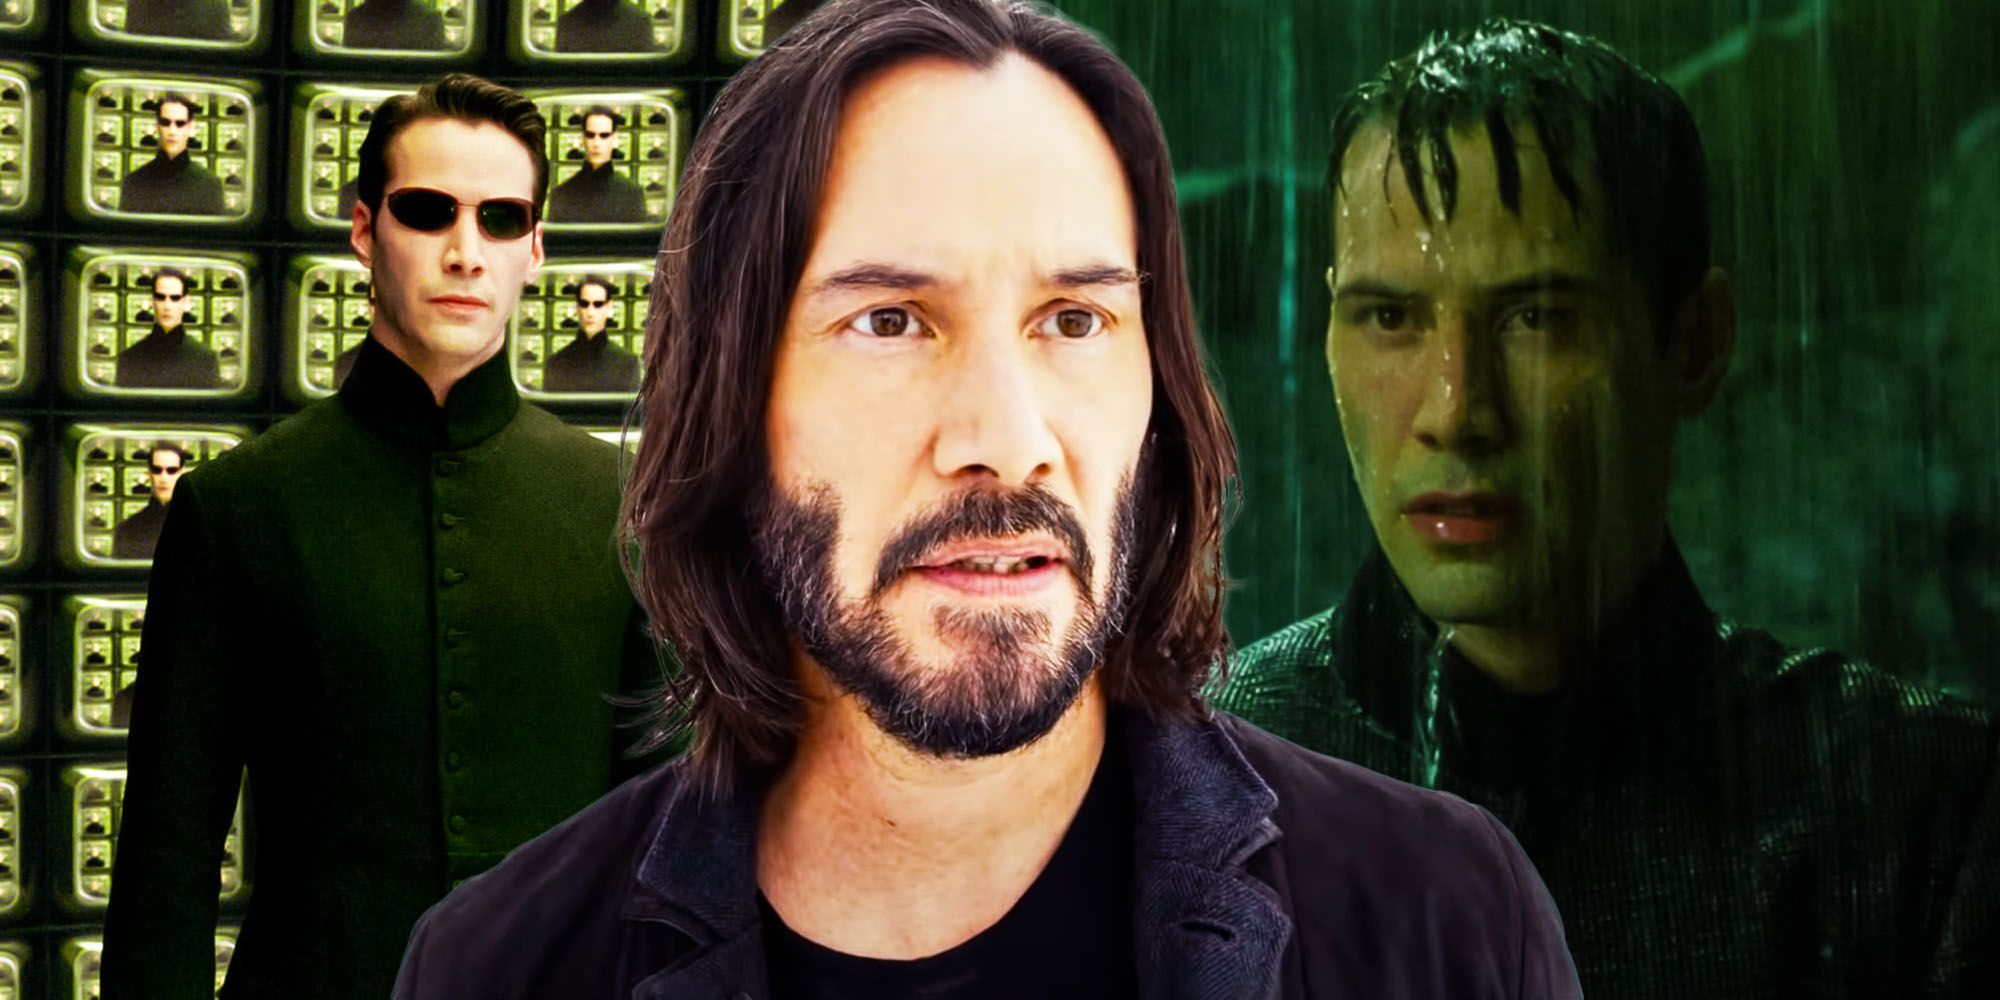 Is Matrix 4 the best sequel?